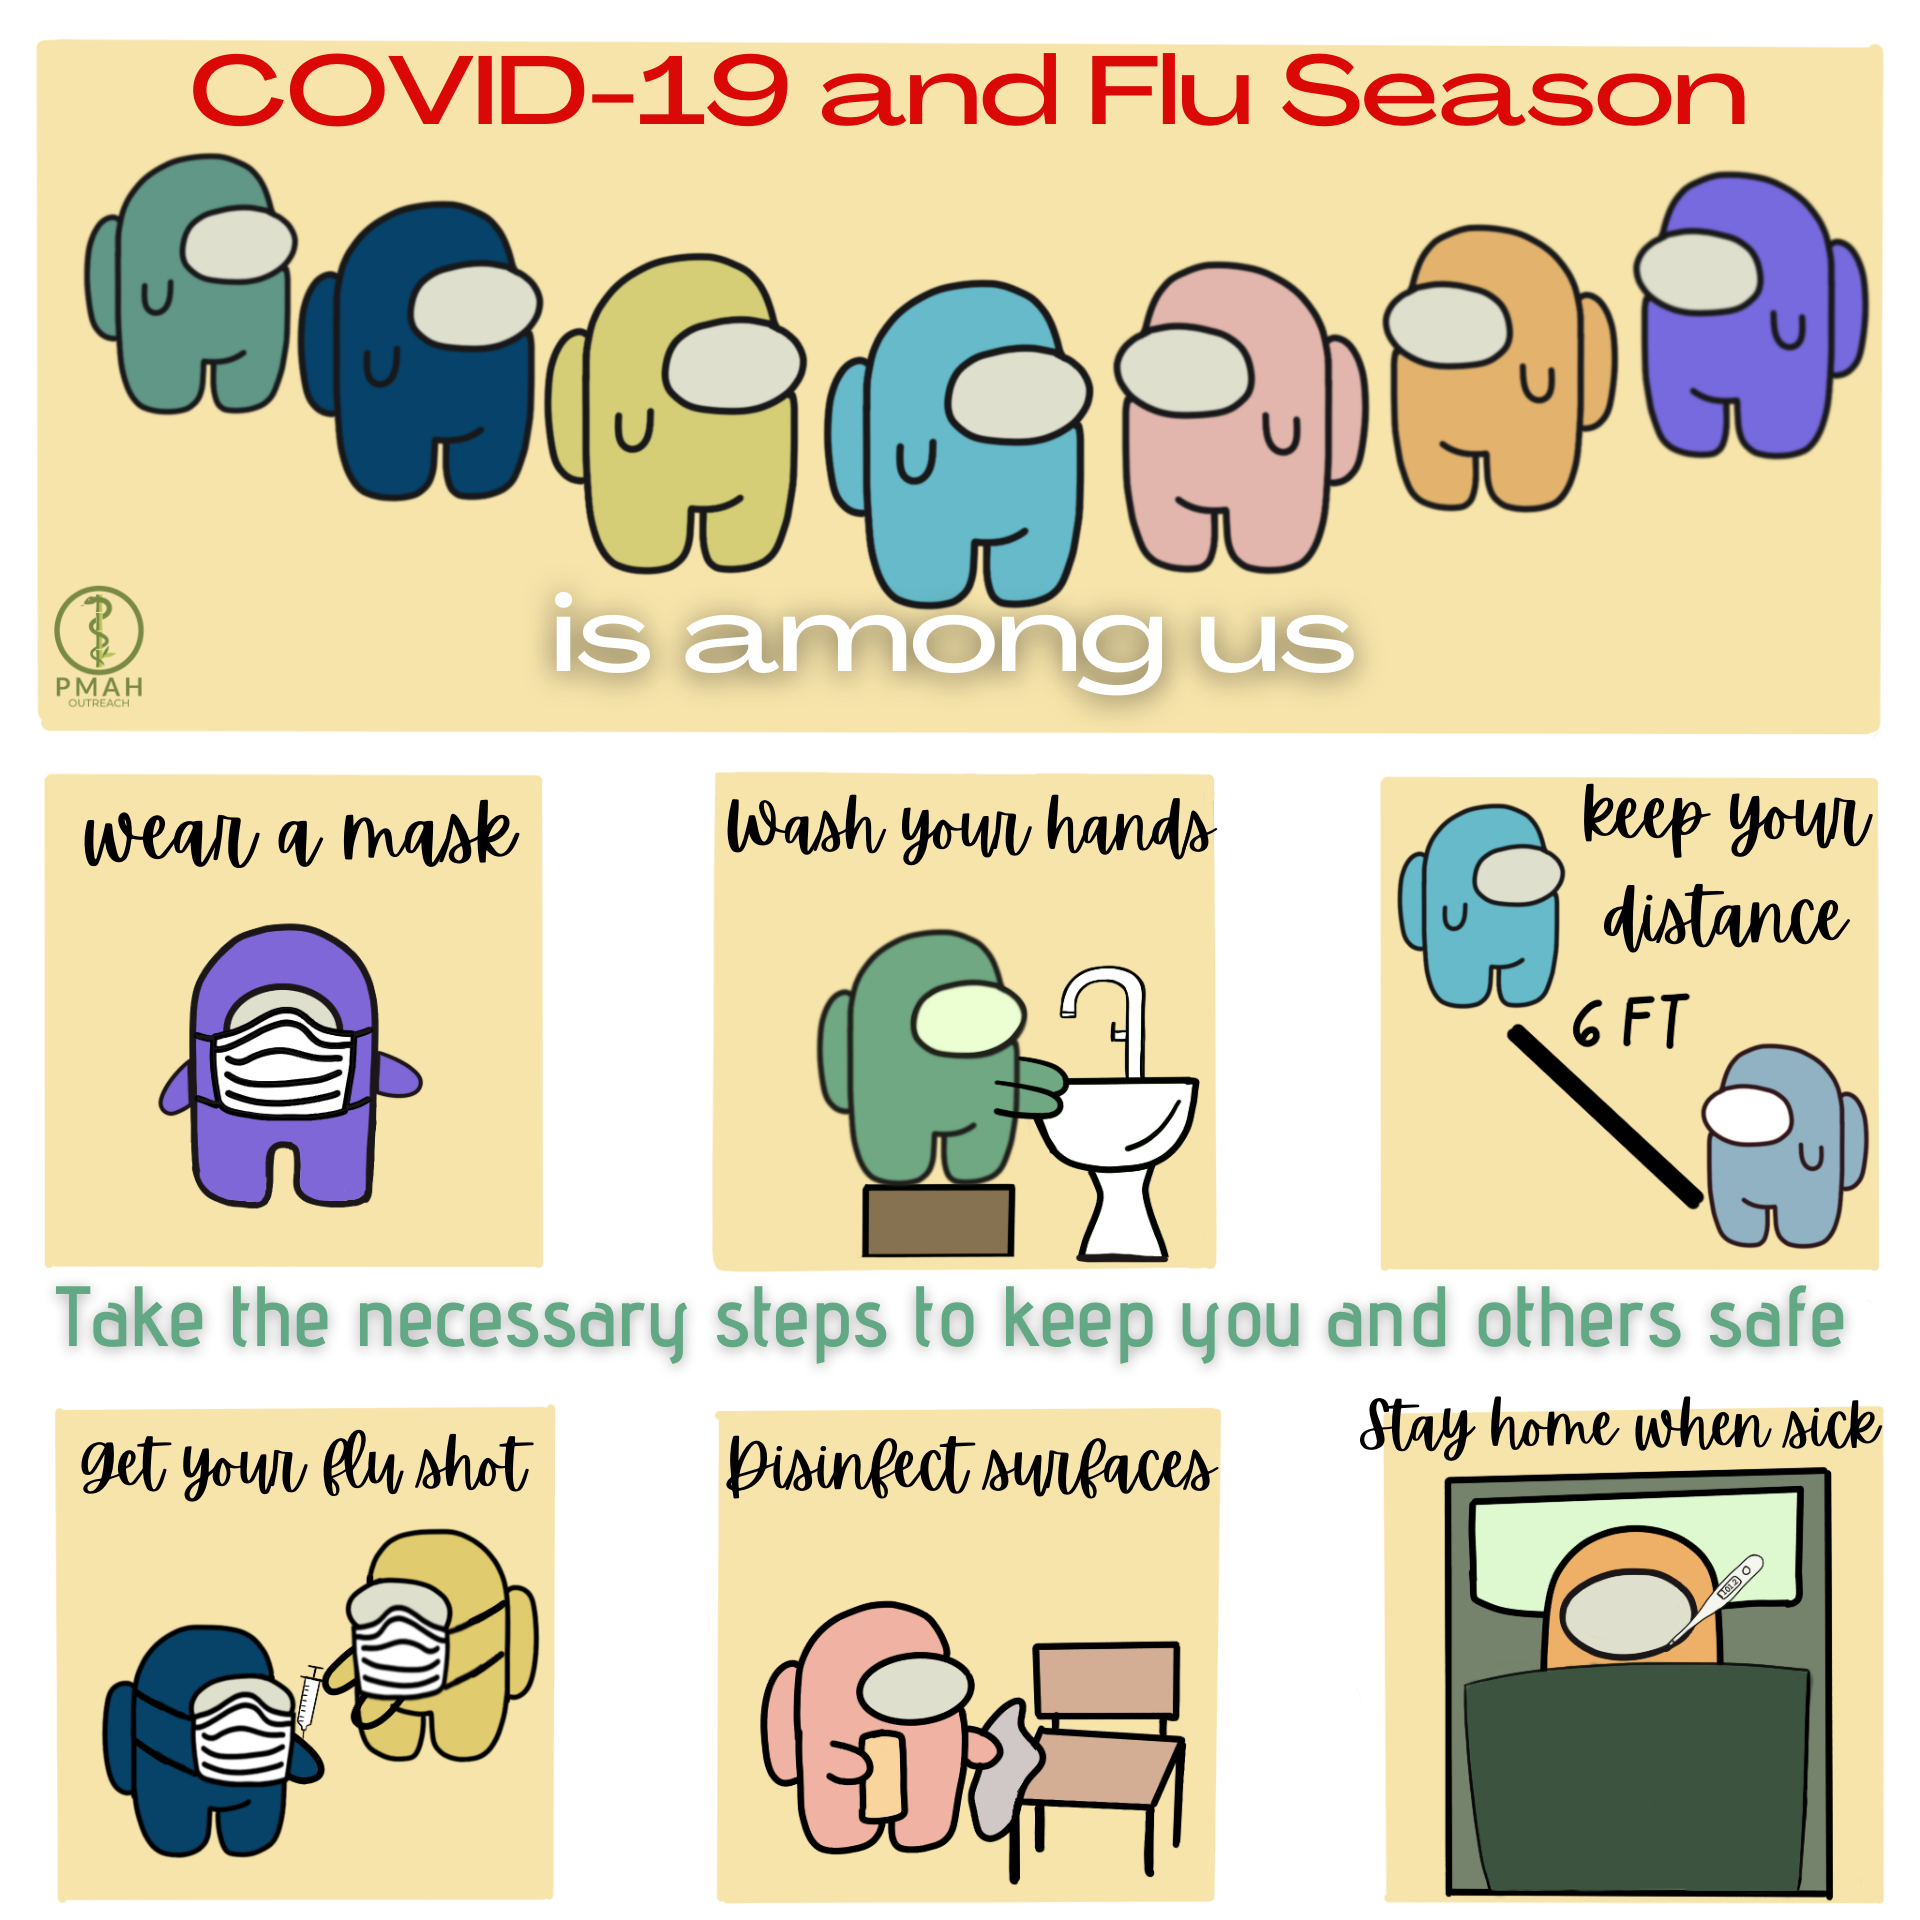 Among us - Flu and COVID.png